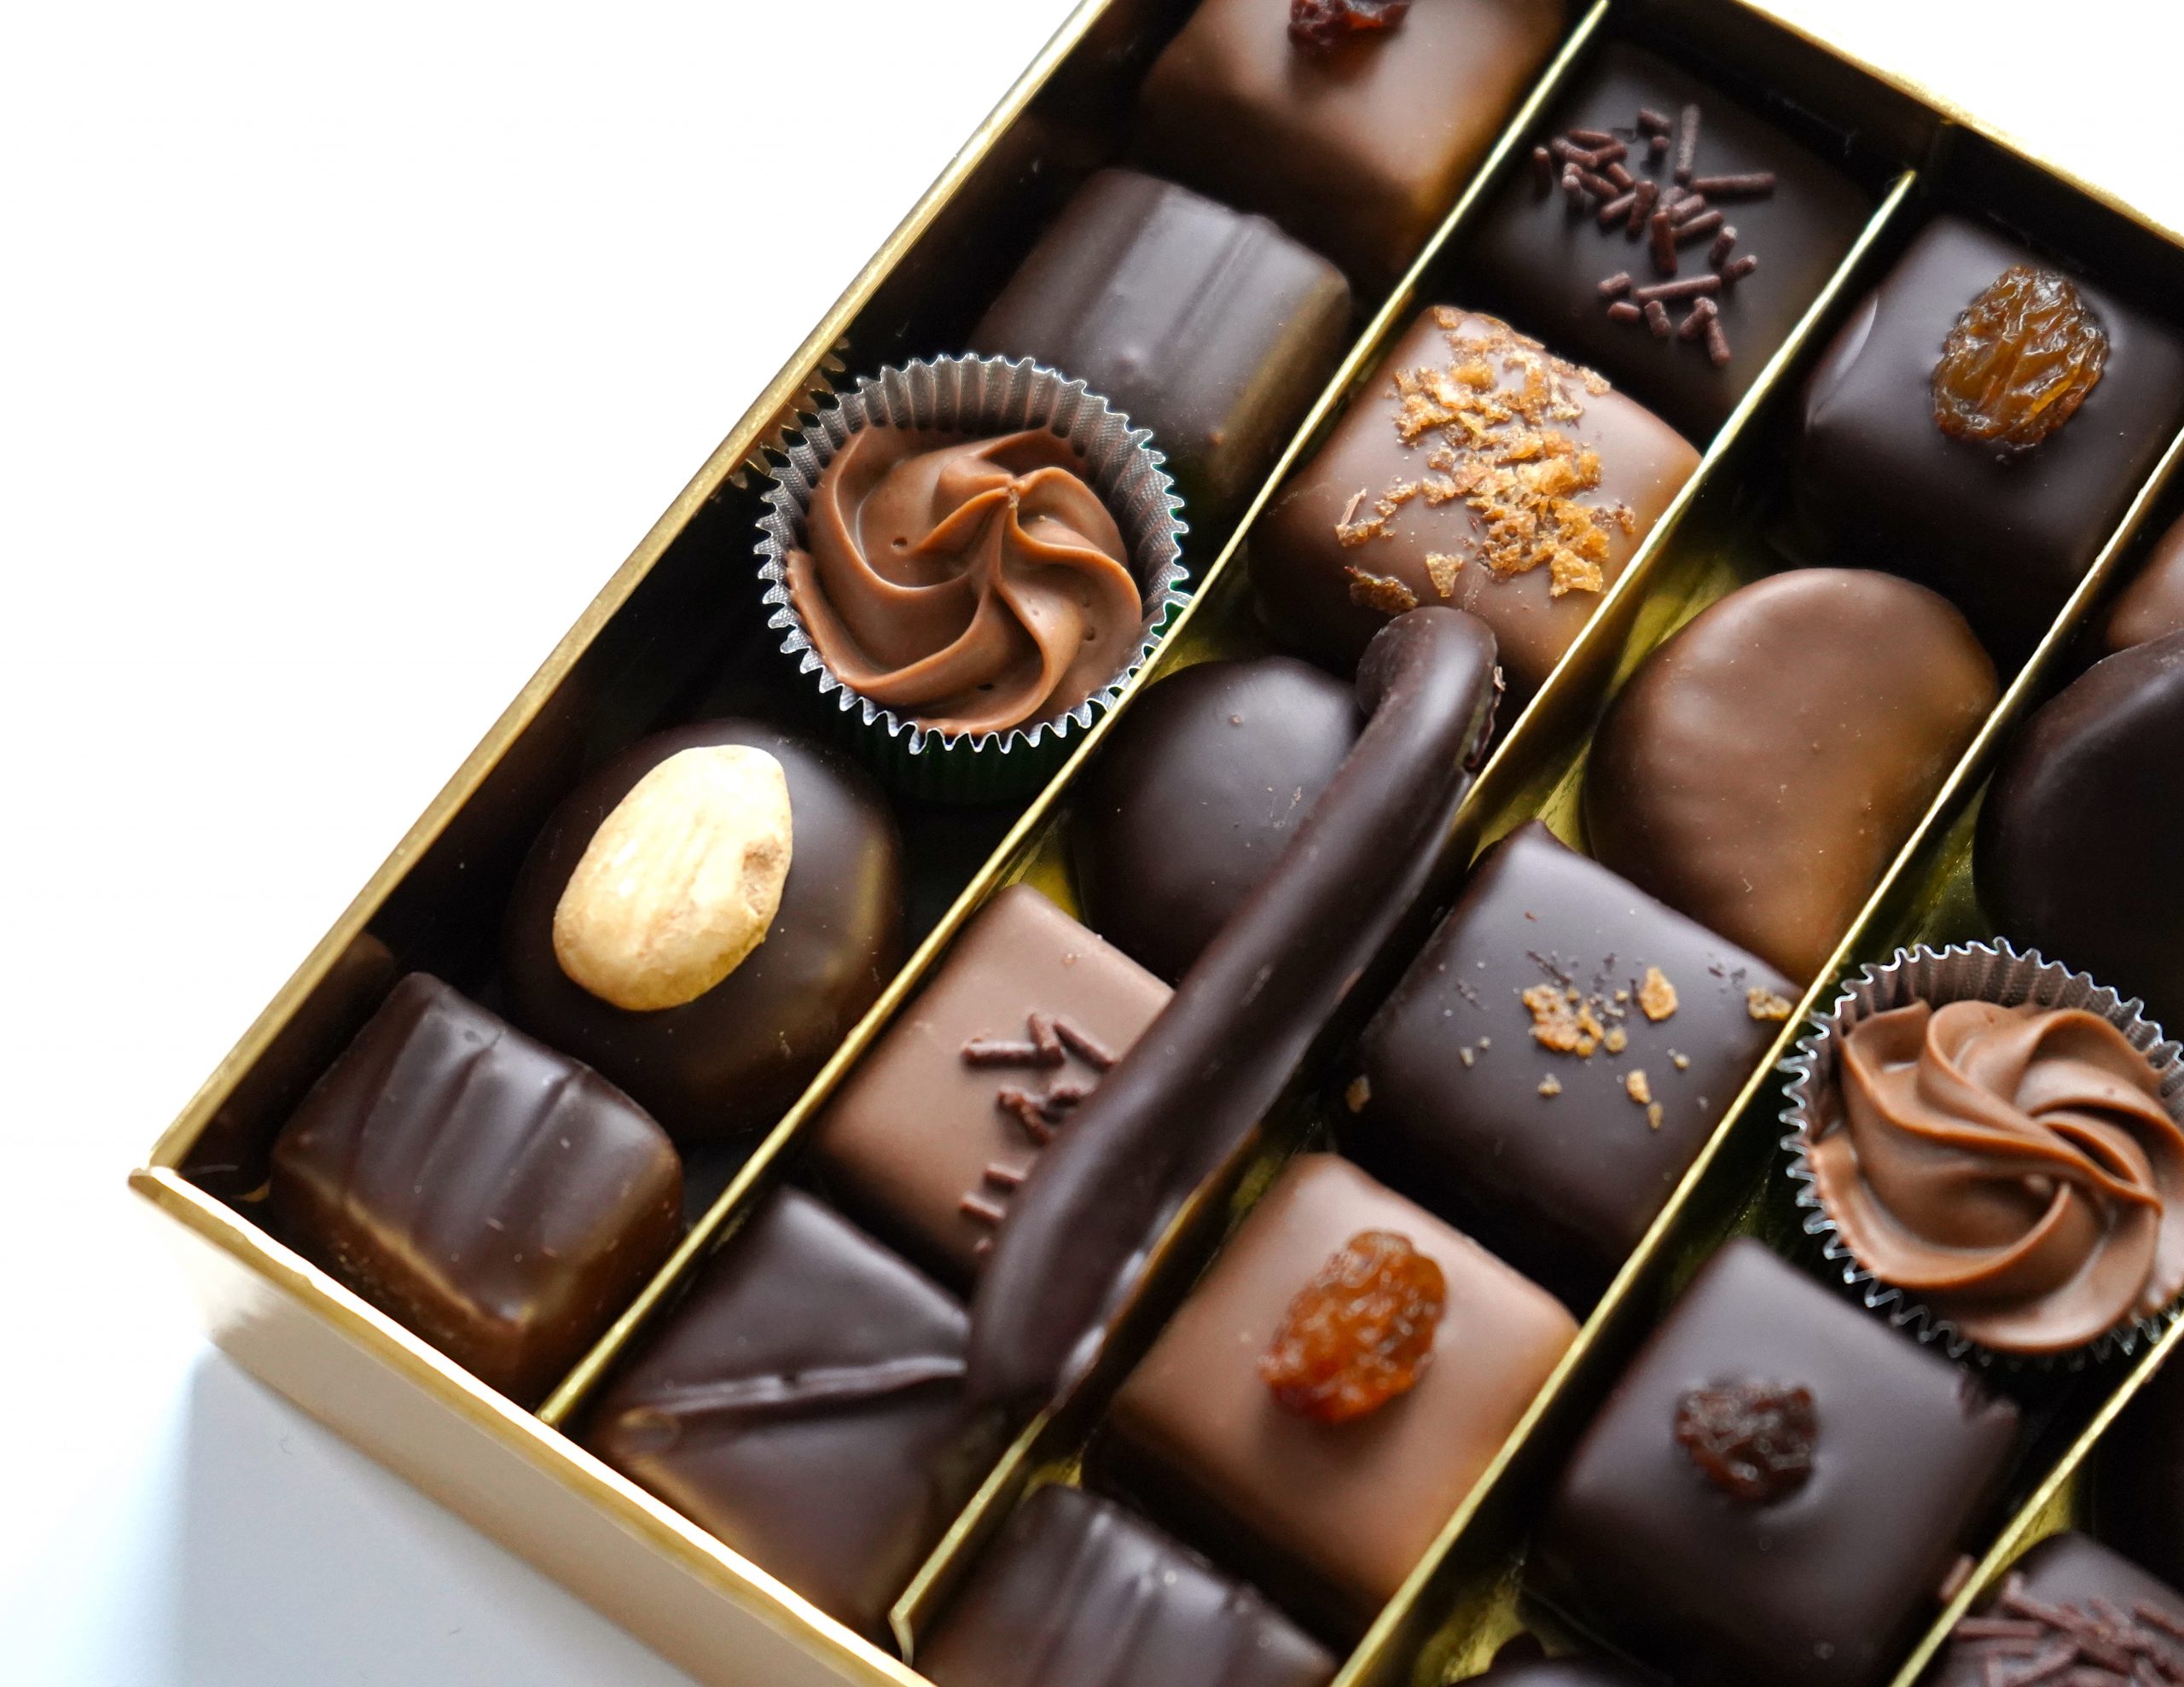 Chocolats (assortiments de bonbons) Boite luxe fantaisie - 400g